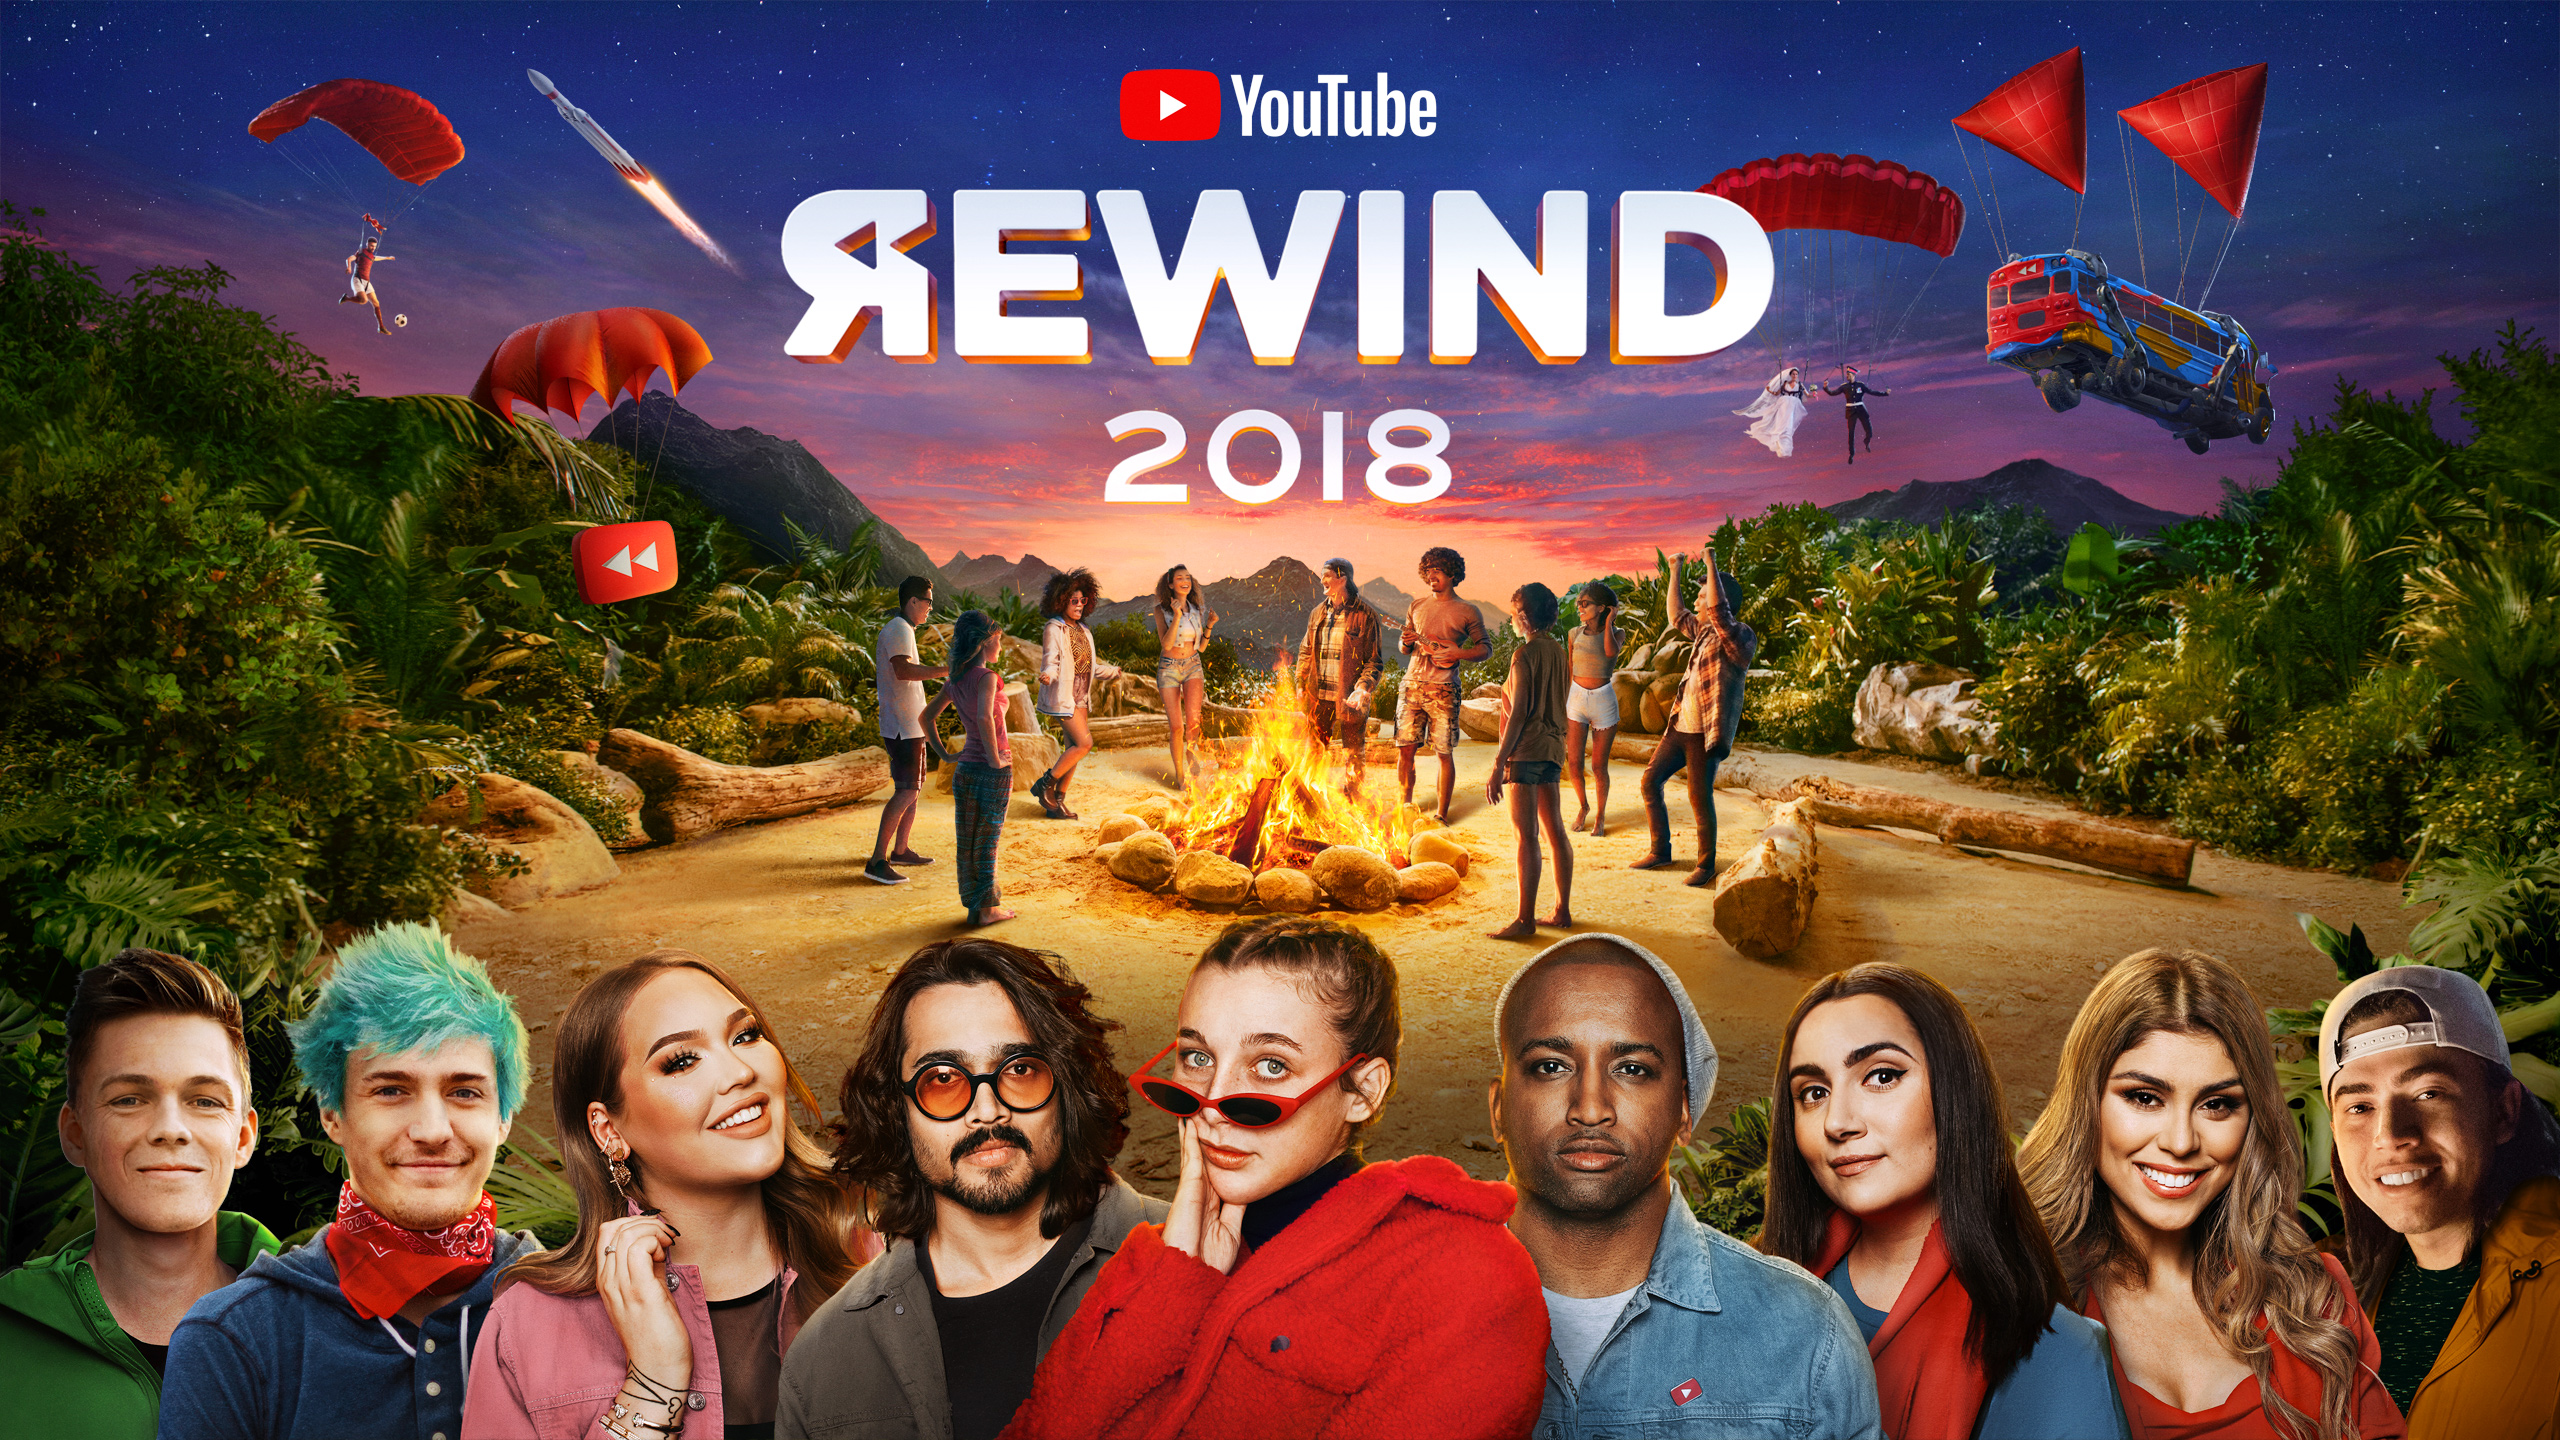 YouTube Rewind 2018 ya está aquí. #YouTubeRewind